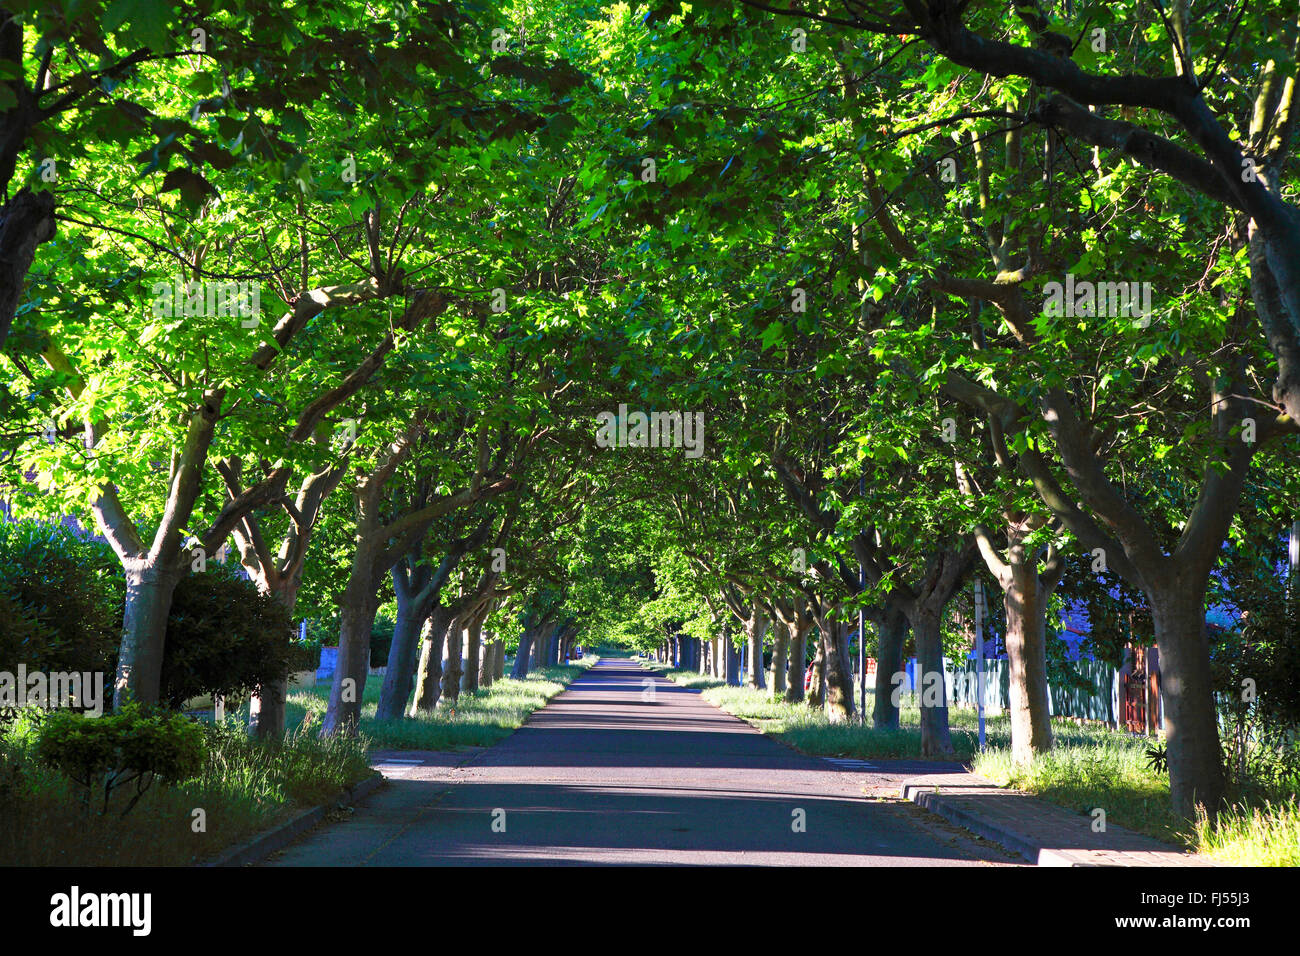 avenue of plane trees, France, Camargue, Salin de Giraud Stock Photo